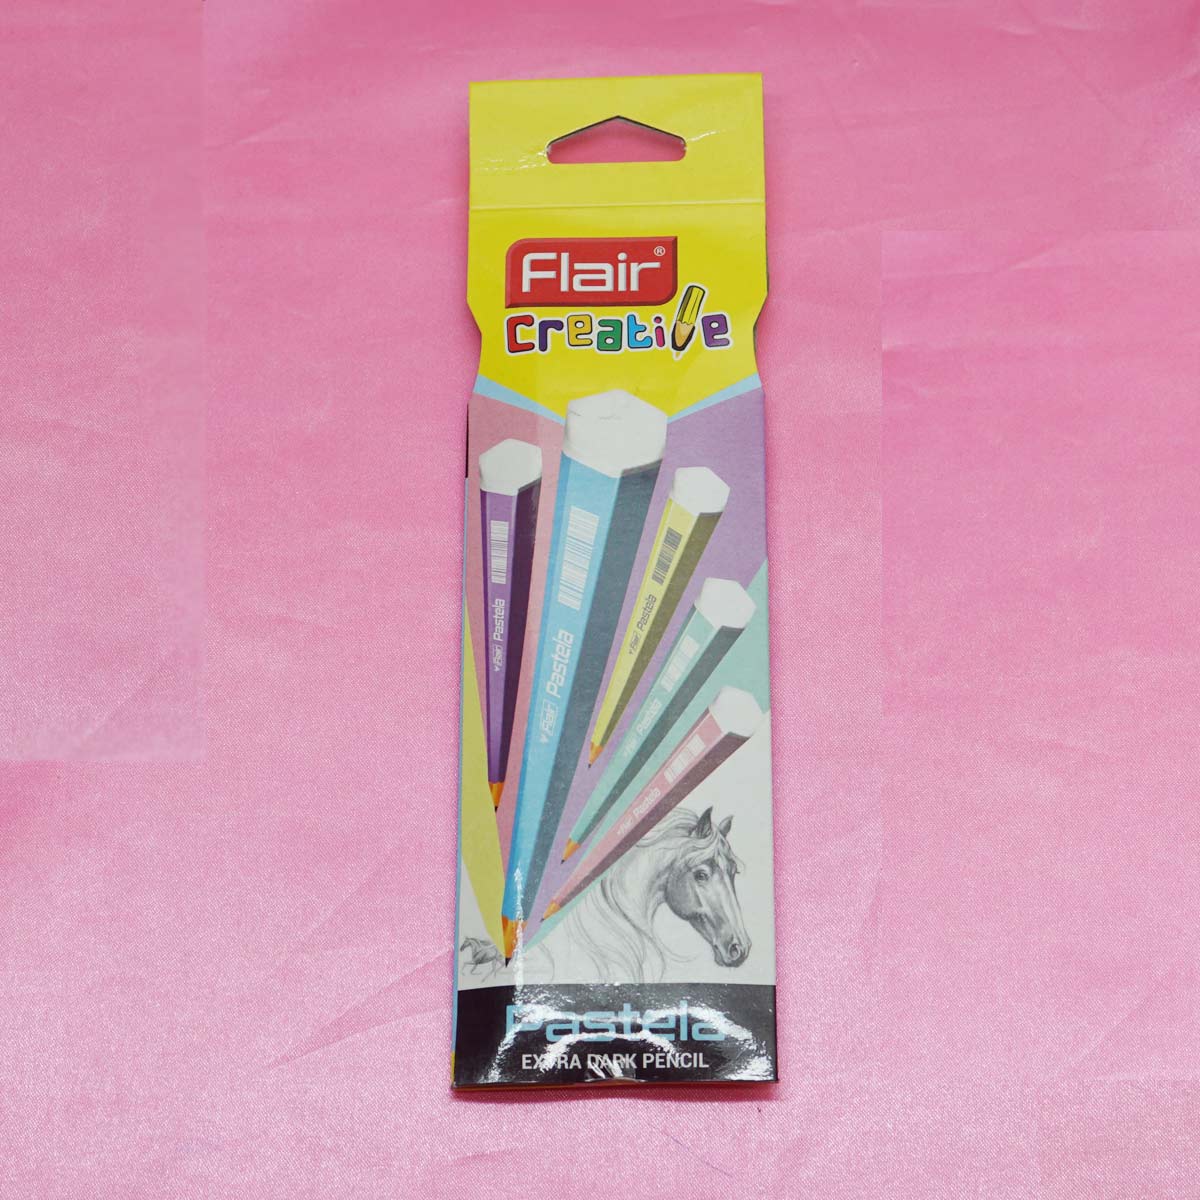 Flair Creative Pastela Extra Dark Pencil Pack of 5 Pieces SKU 22025